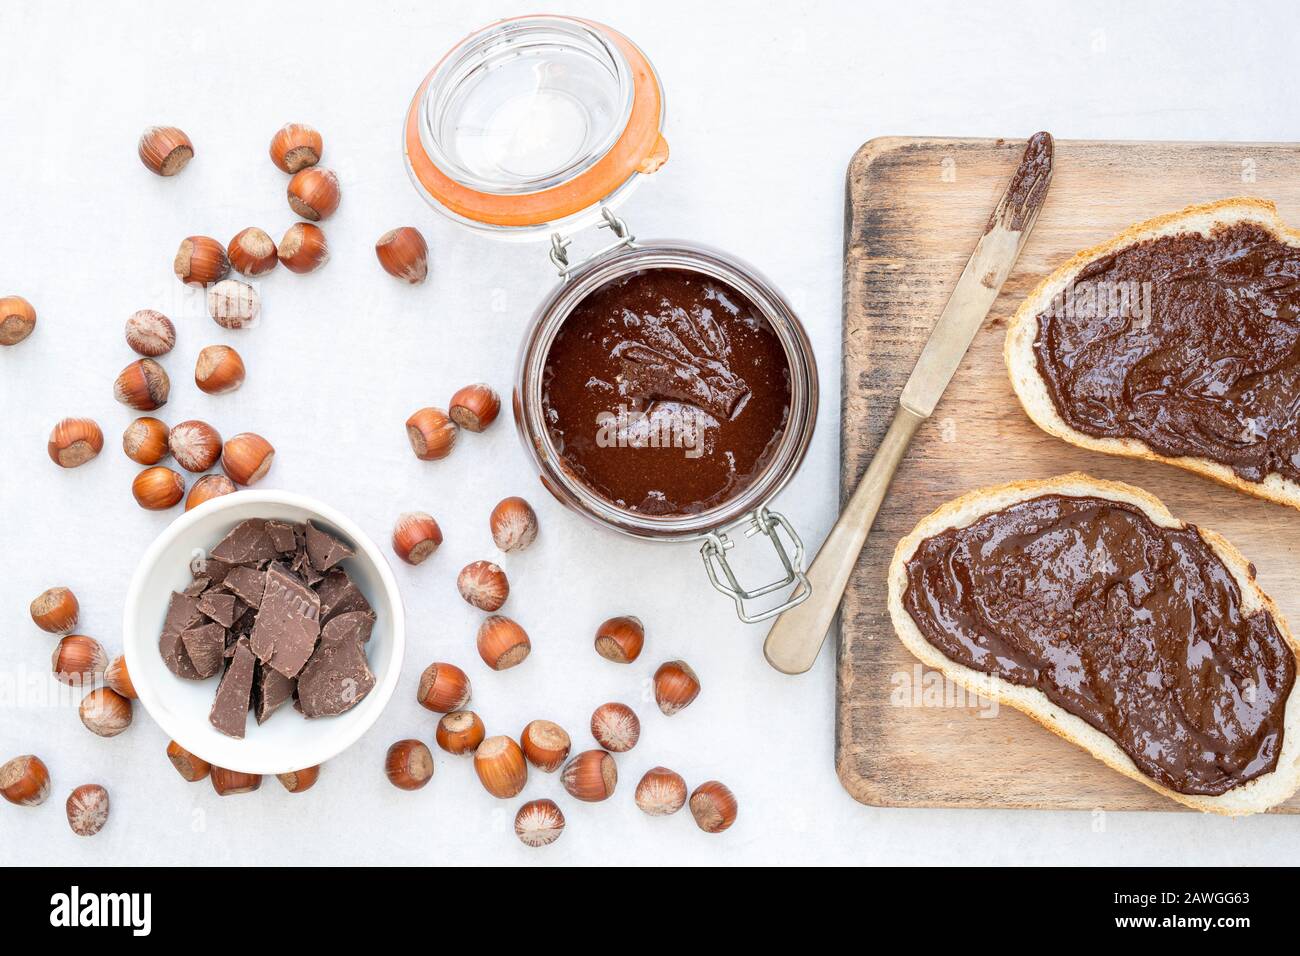 Homemade vegan hazelnut chocolate spread on sourdough bread and in a kilner jar, with unshelled hazelnuts and chunks of dark chocolate Stock Photo